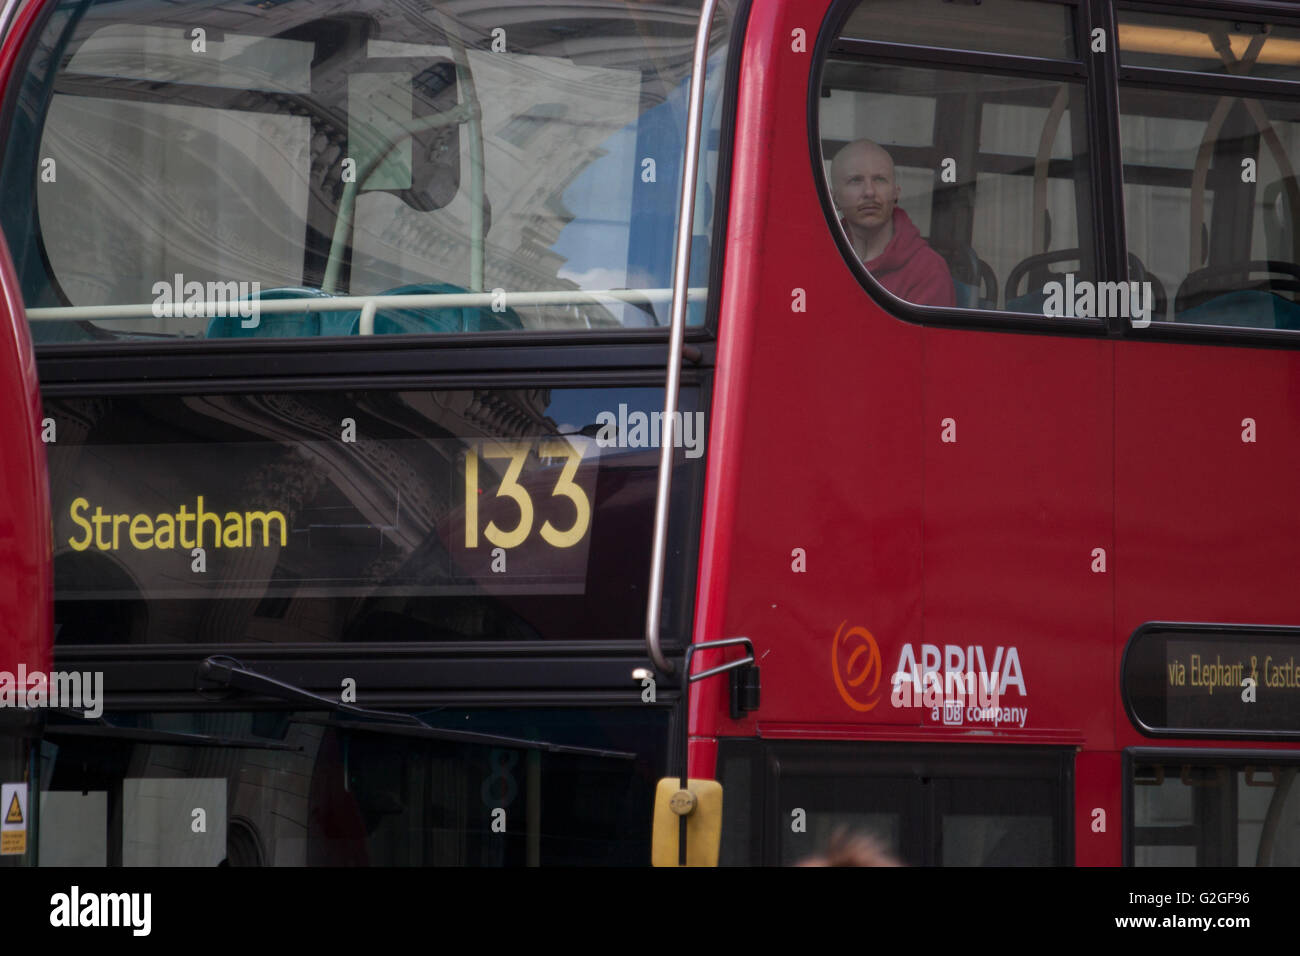 Arriva bus passenger central London Stock Photo